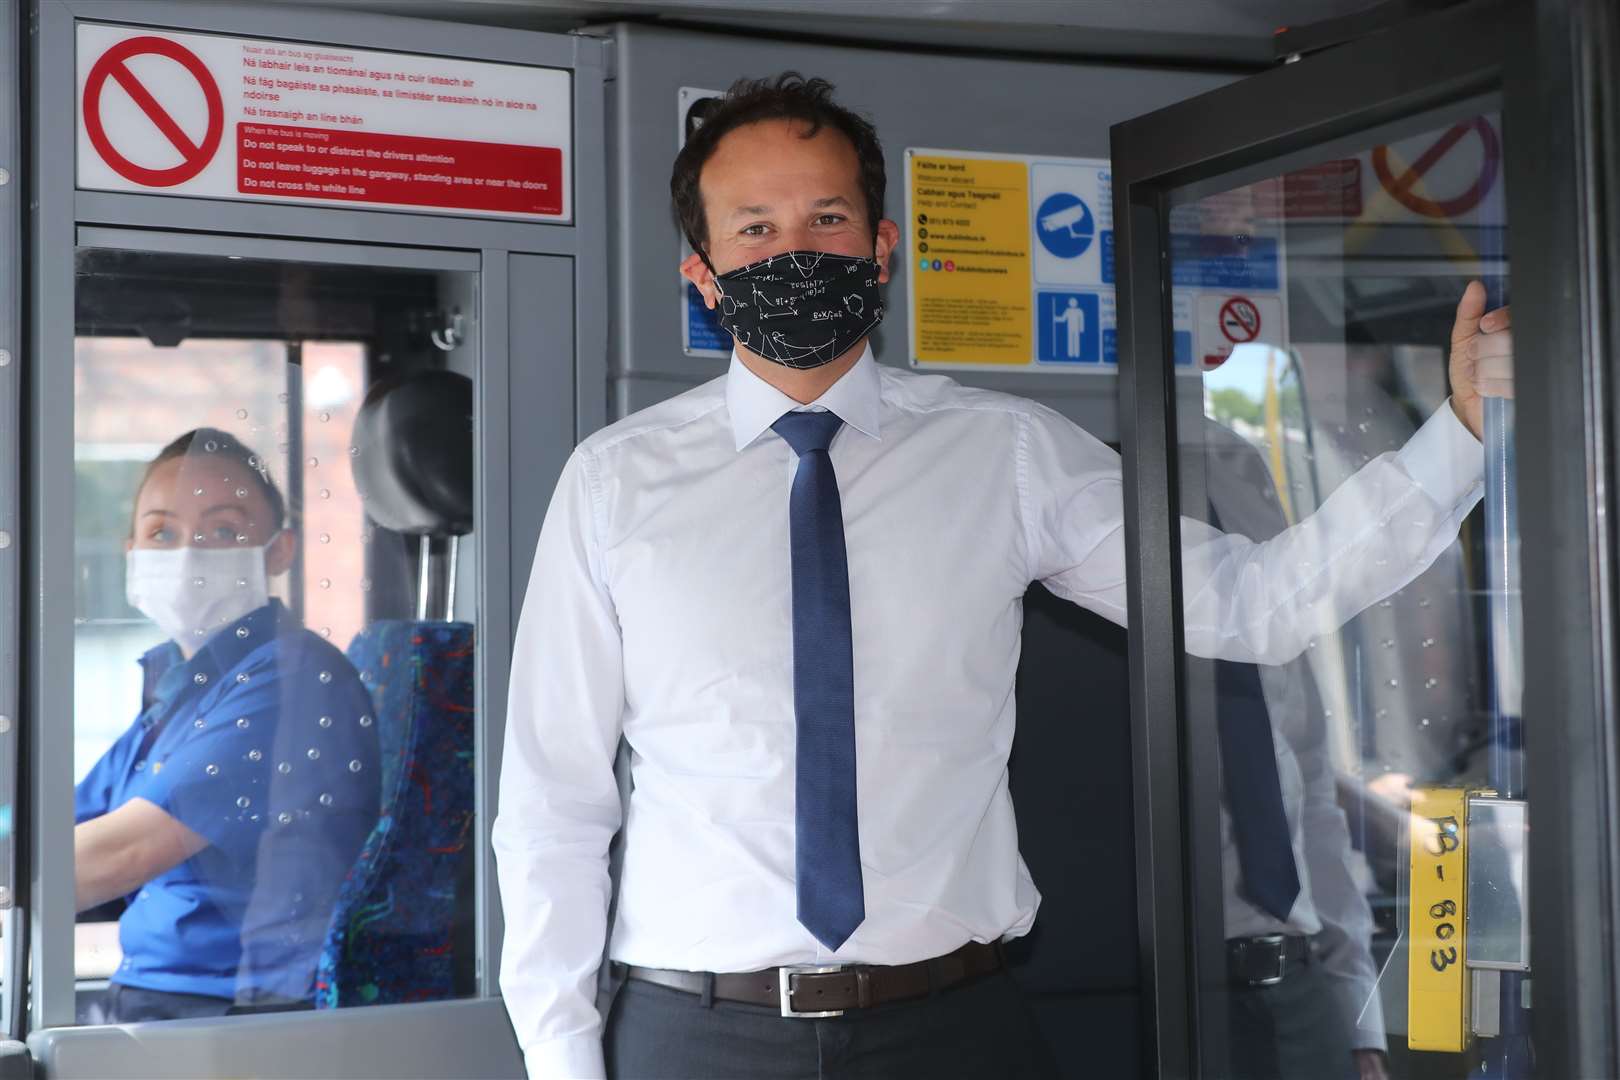 Taoiseach Leo Varadkar on a Dublin Bus in Dublin city centre, encouraging passengers to wear face masks on public transport in Ireland (Niall Carson/PA)